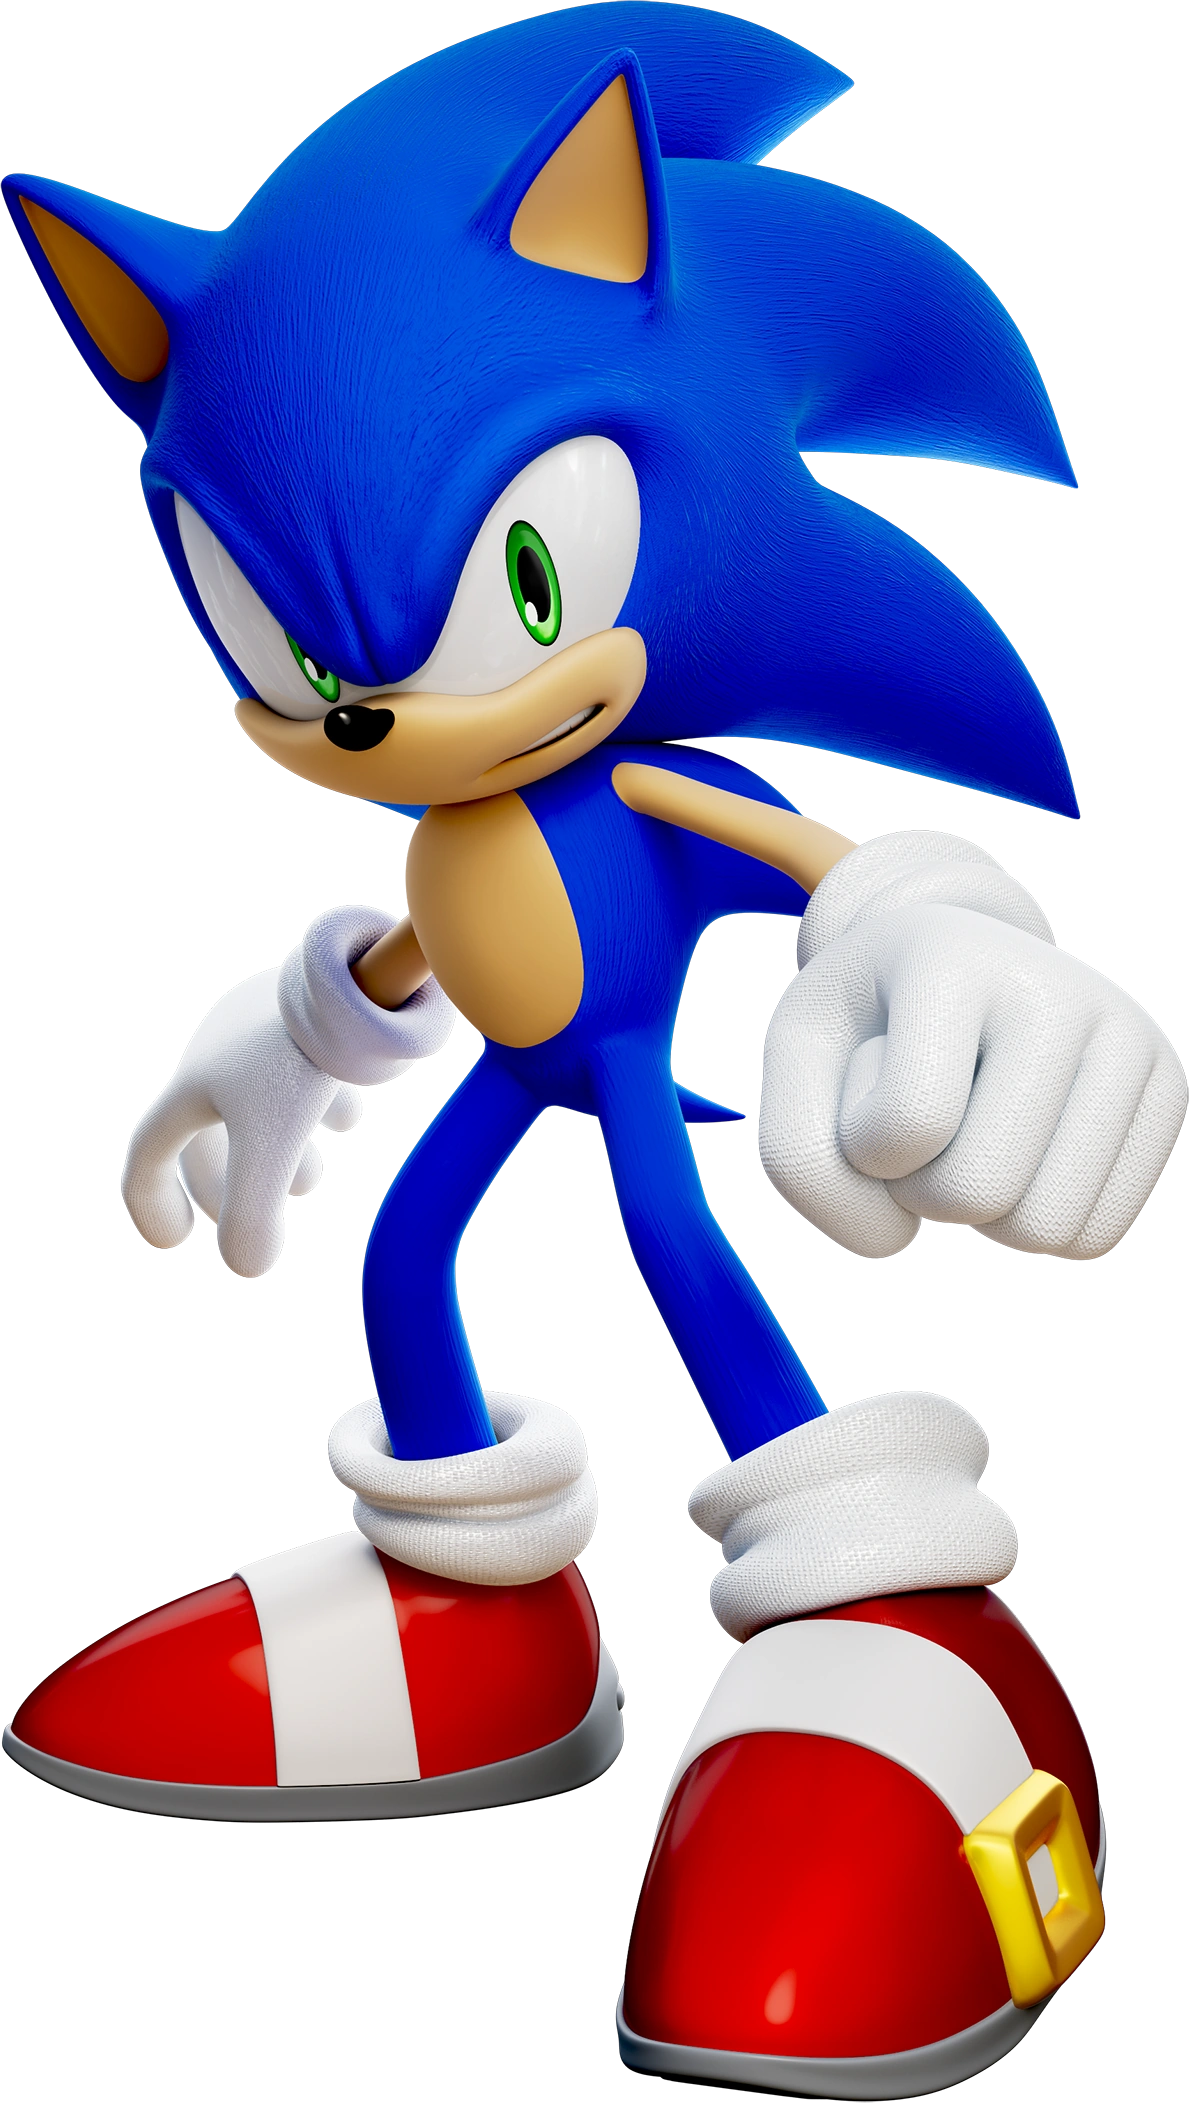 Sonic the Hedgehog (character) - Wikipedia